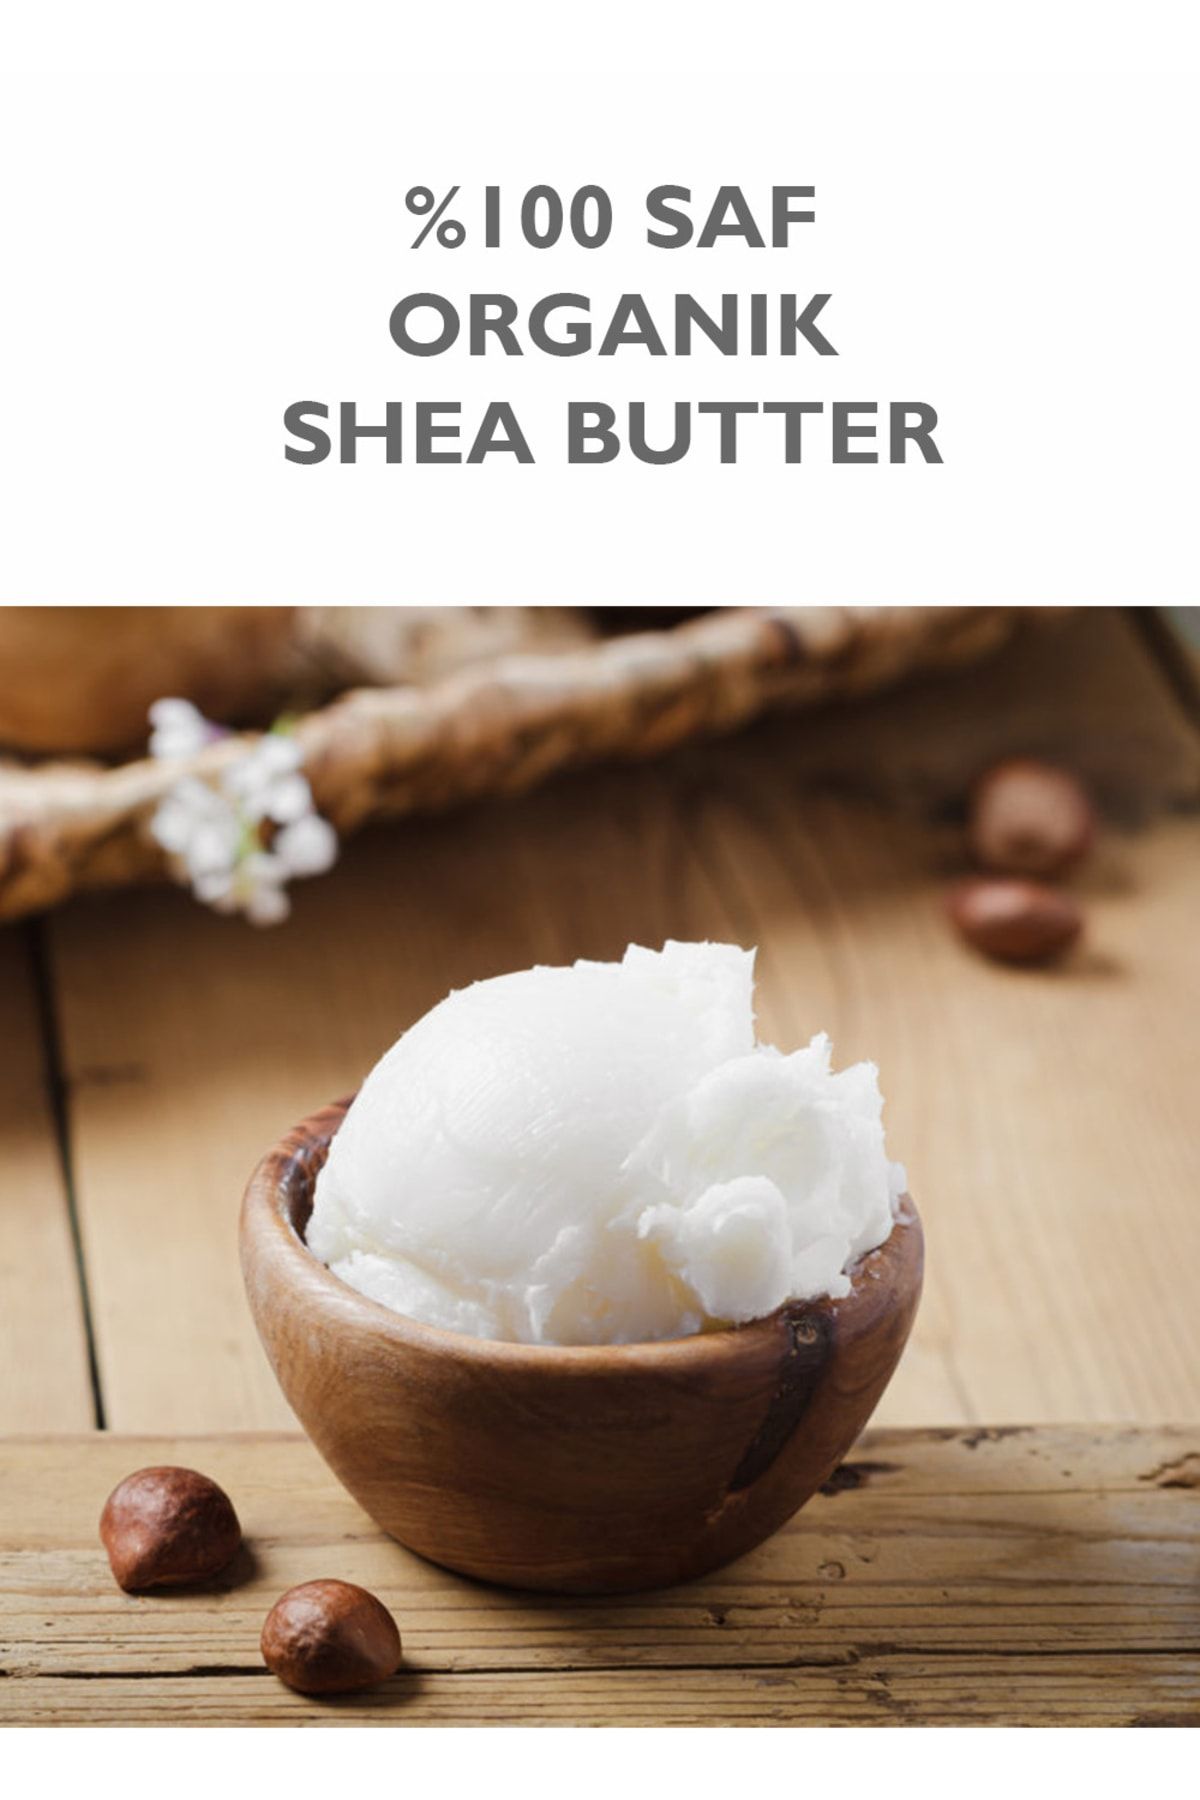 Loft Saf Shea Butter (karite Yağı) %100 Saf Ve Doğal 115ml